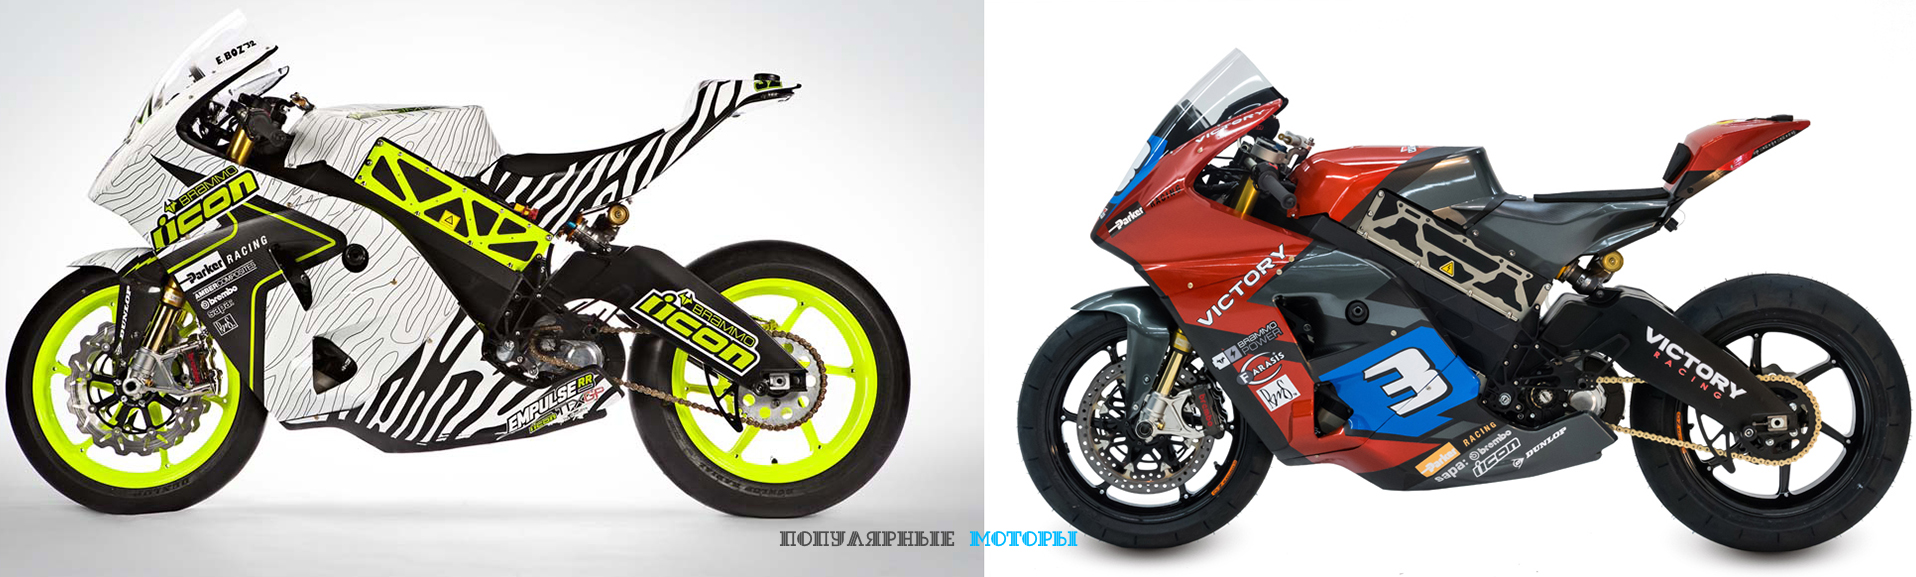 Фото прототипа электрического мотоцикла Victory — Brammo vs Victory